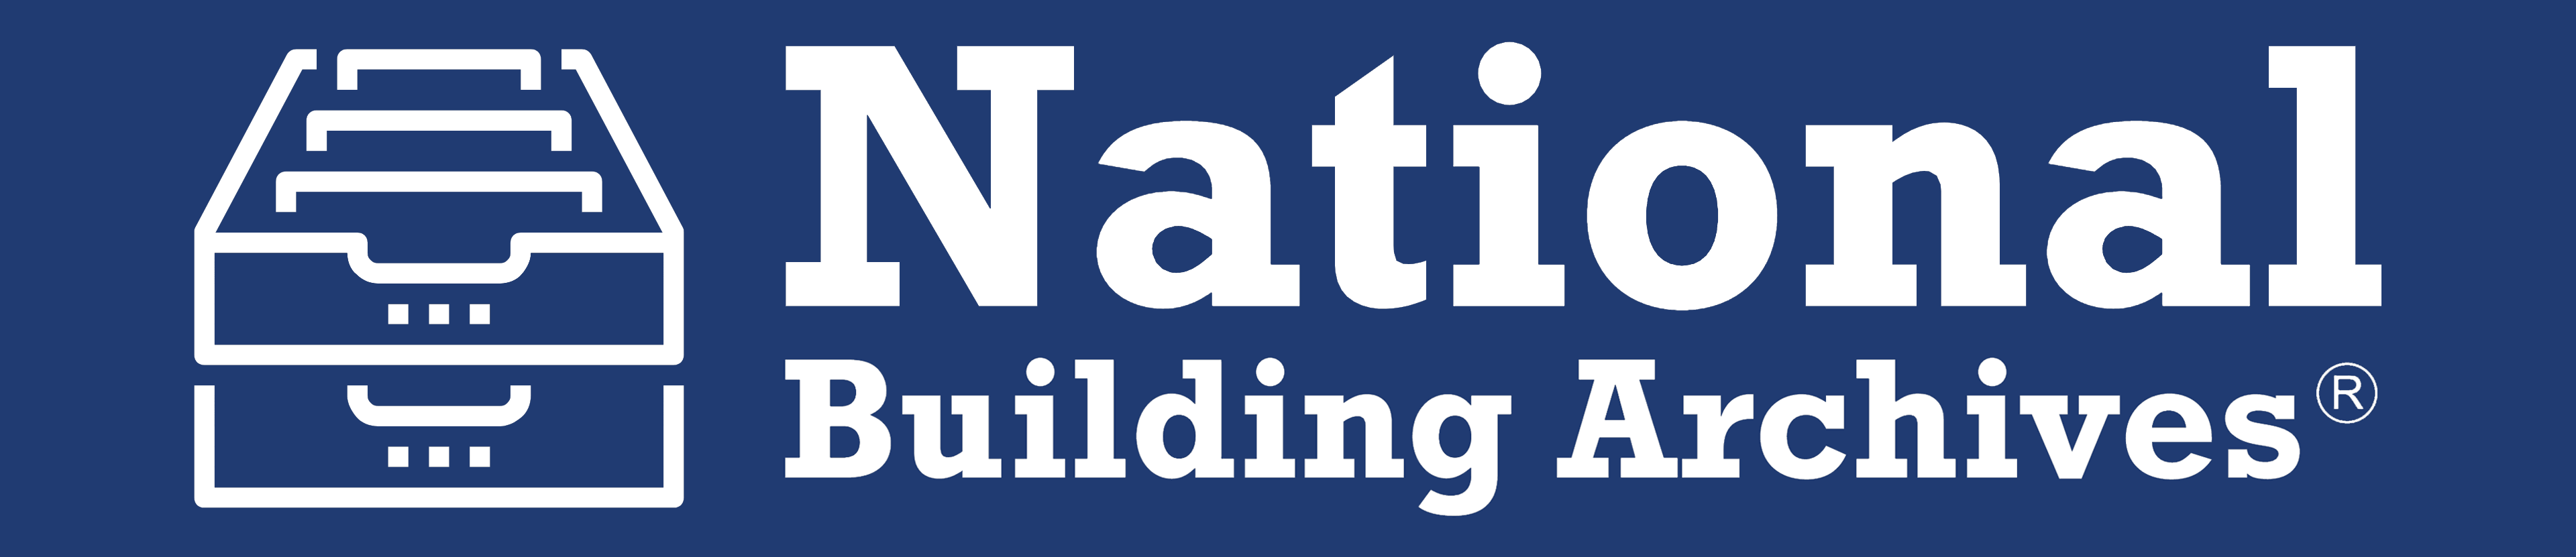 National Building Archives logo